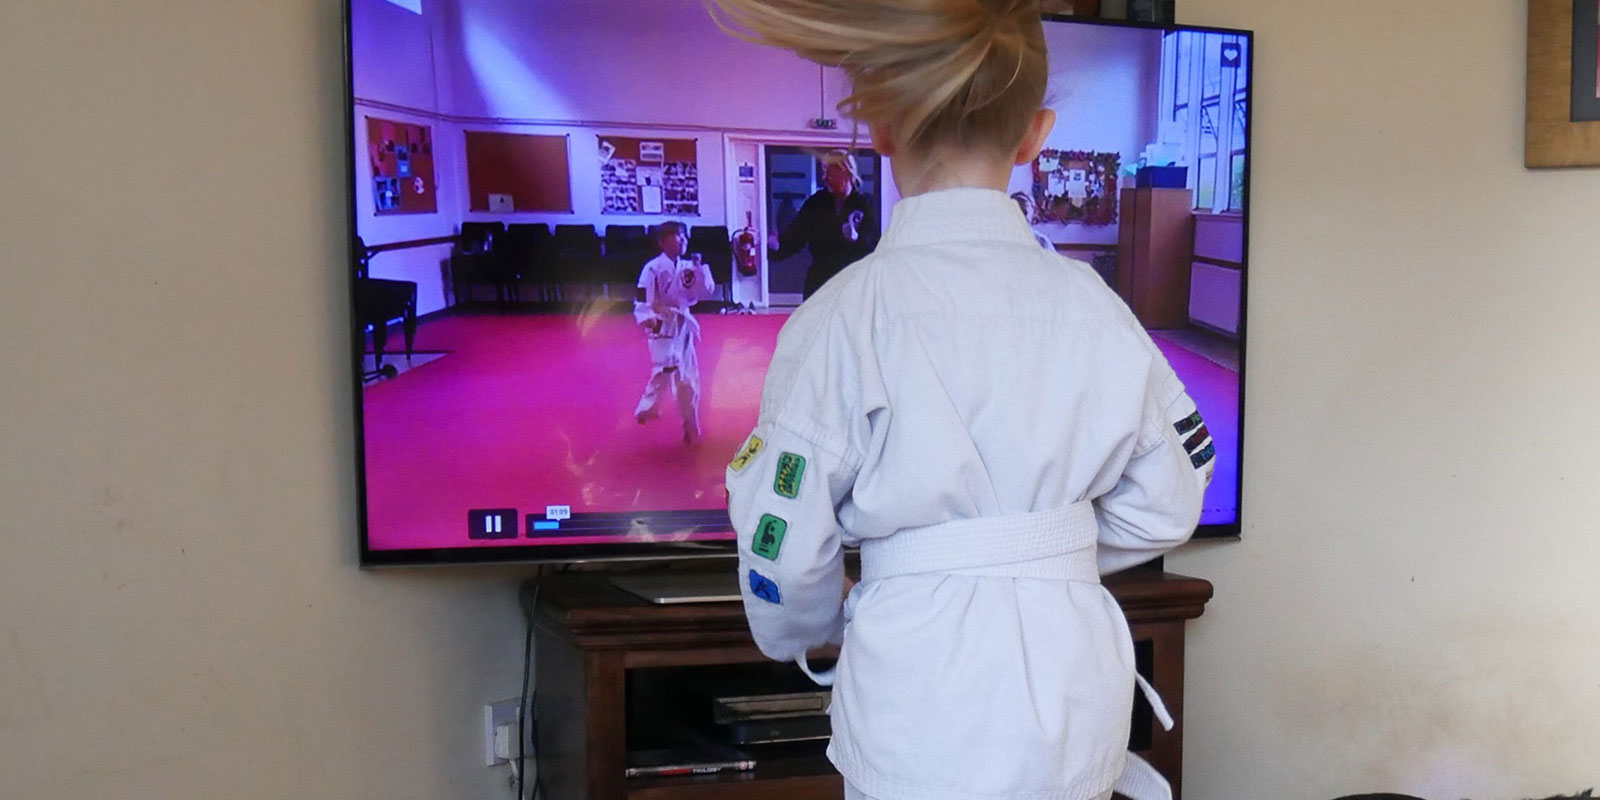 Live streamed kids karate classes